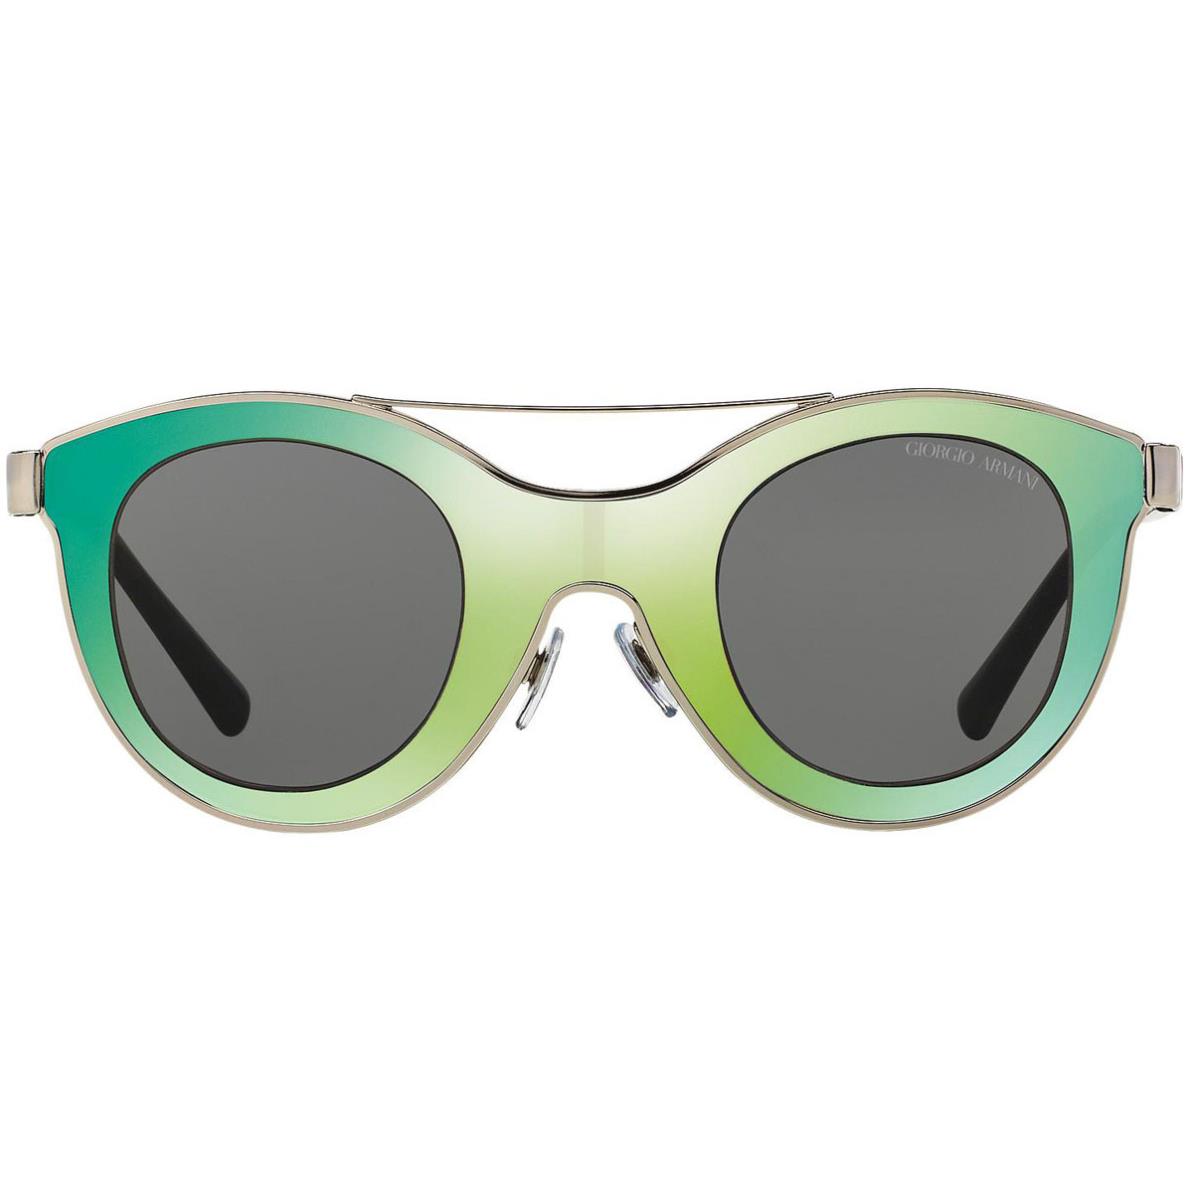 Giorgio Armani Sunglasses AR 6033-301587 Green Silver /grey 39mm - Frame: Green / Silver, Lens: Grey